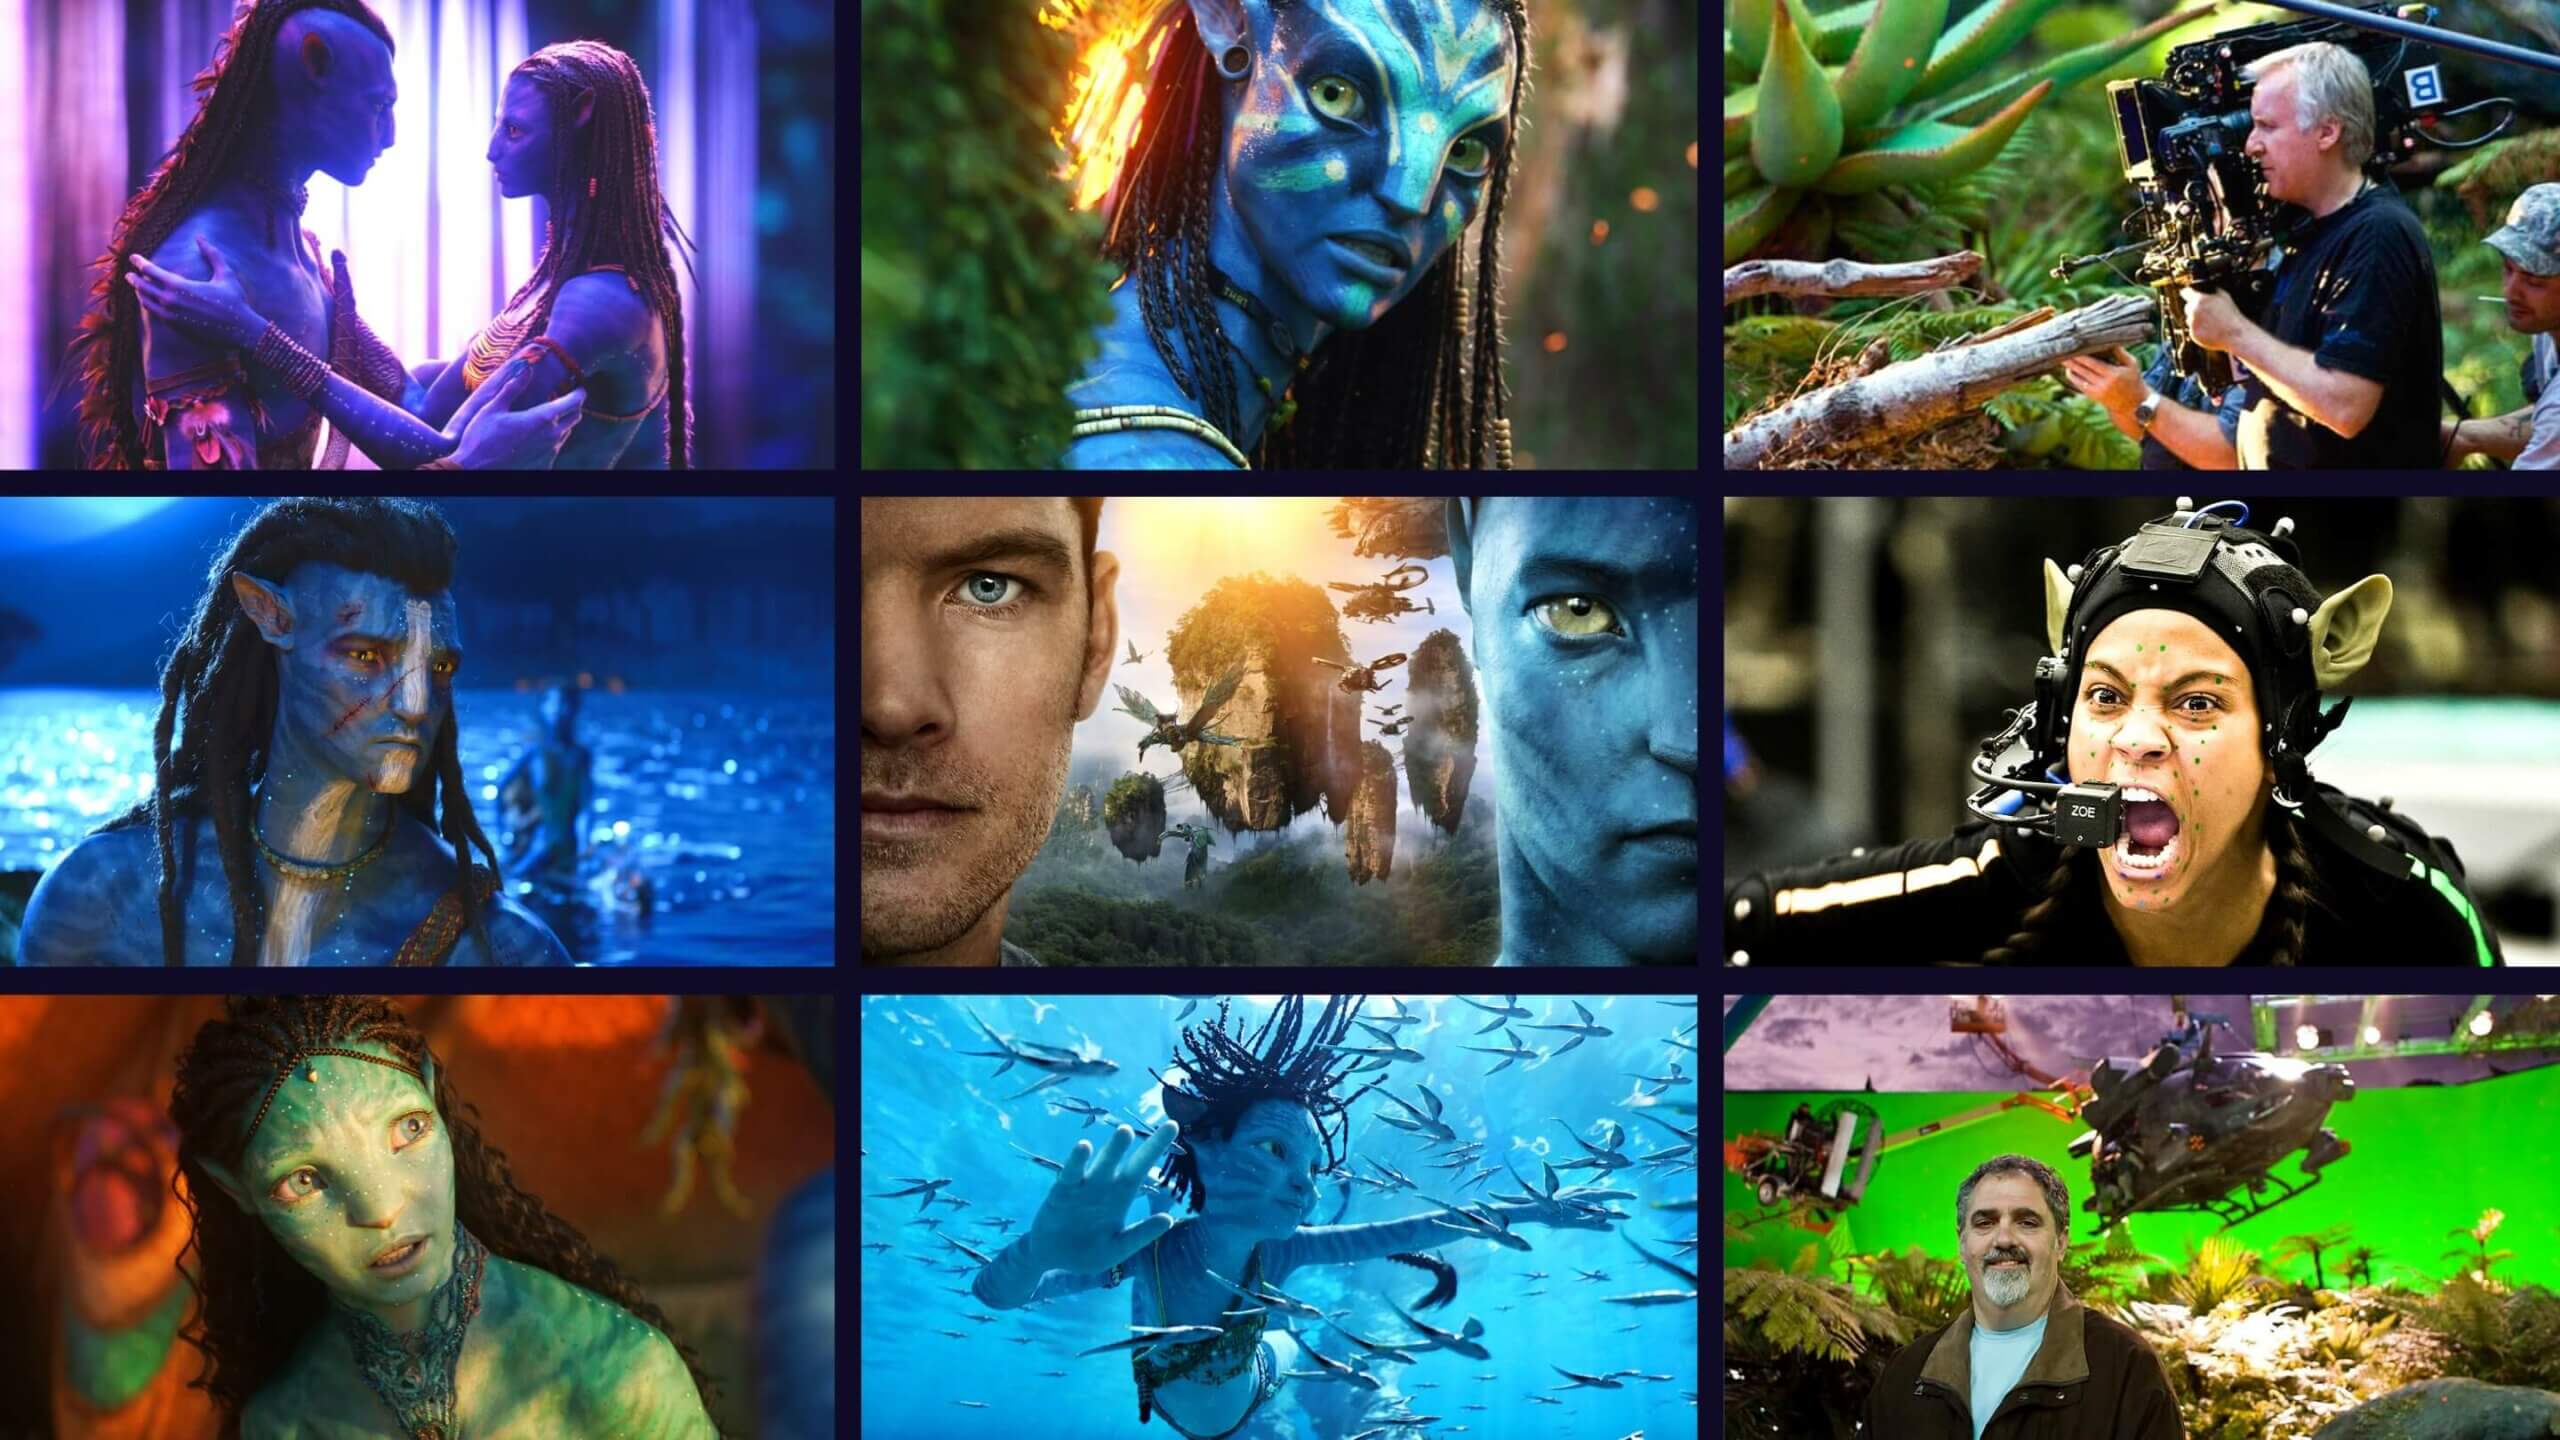 Avatar 4 Has Begun Production Says James Cameron  YouTube